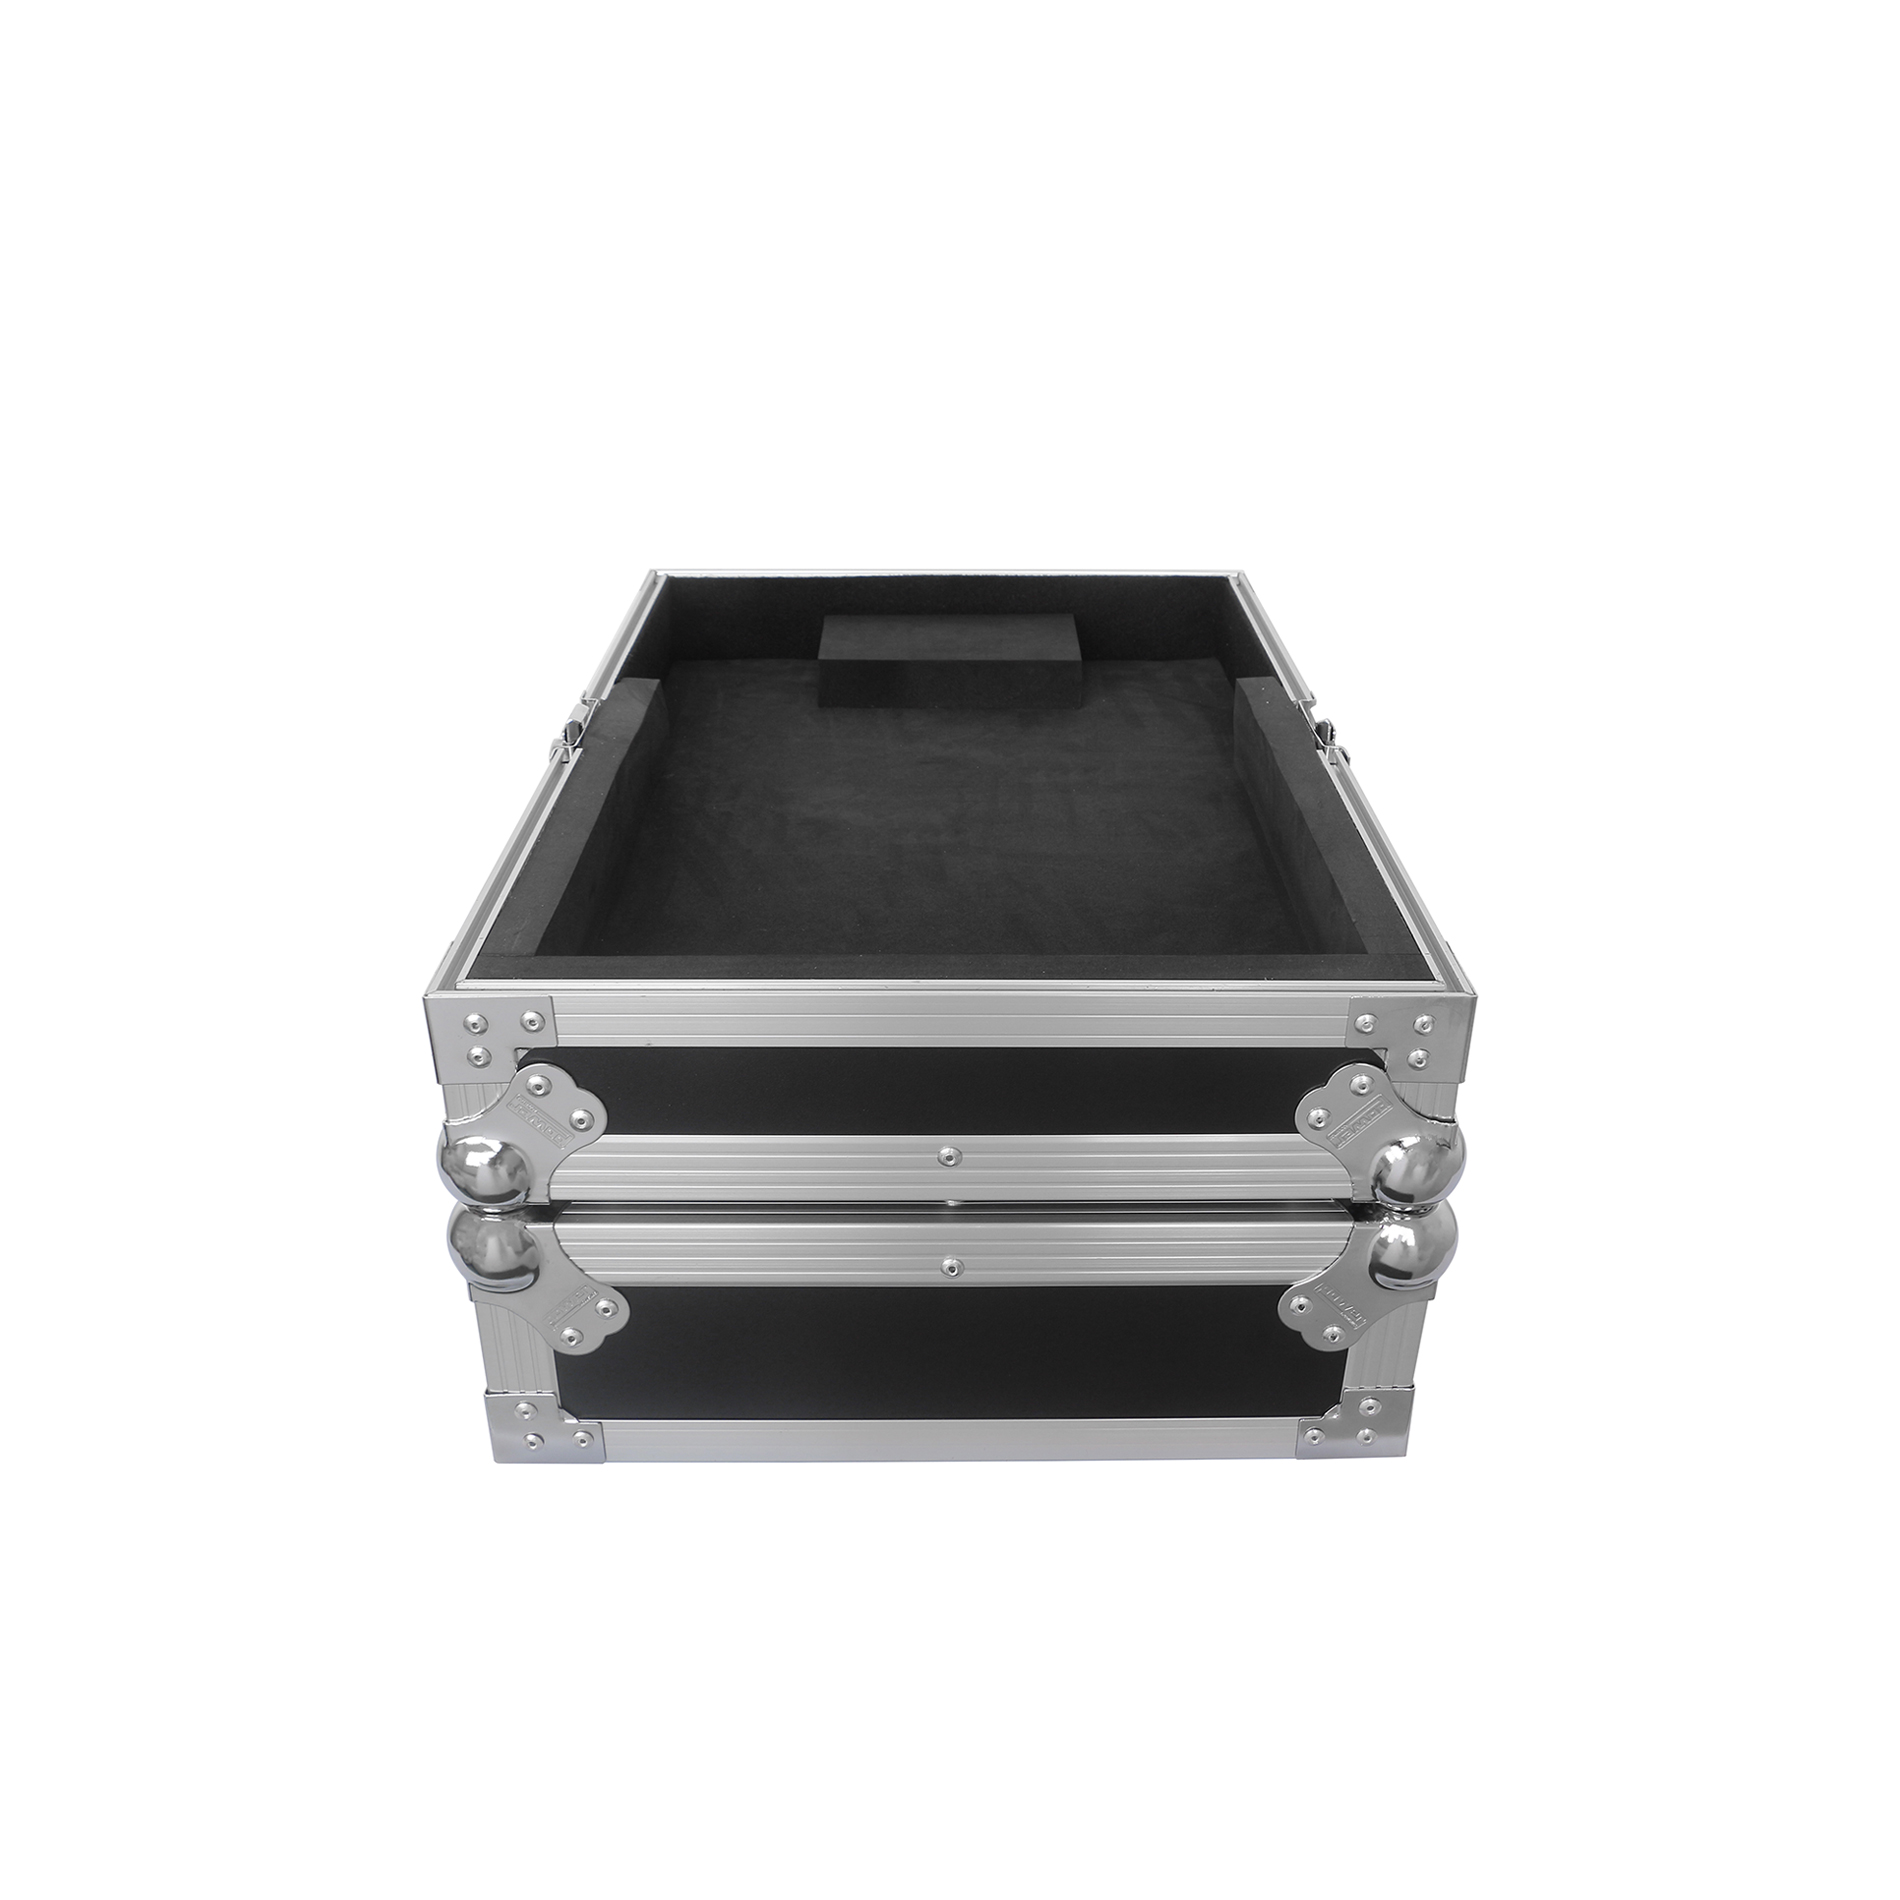 Power Acoustics Fcm Dm3s - Cajas de mezcladores - Variation 1